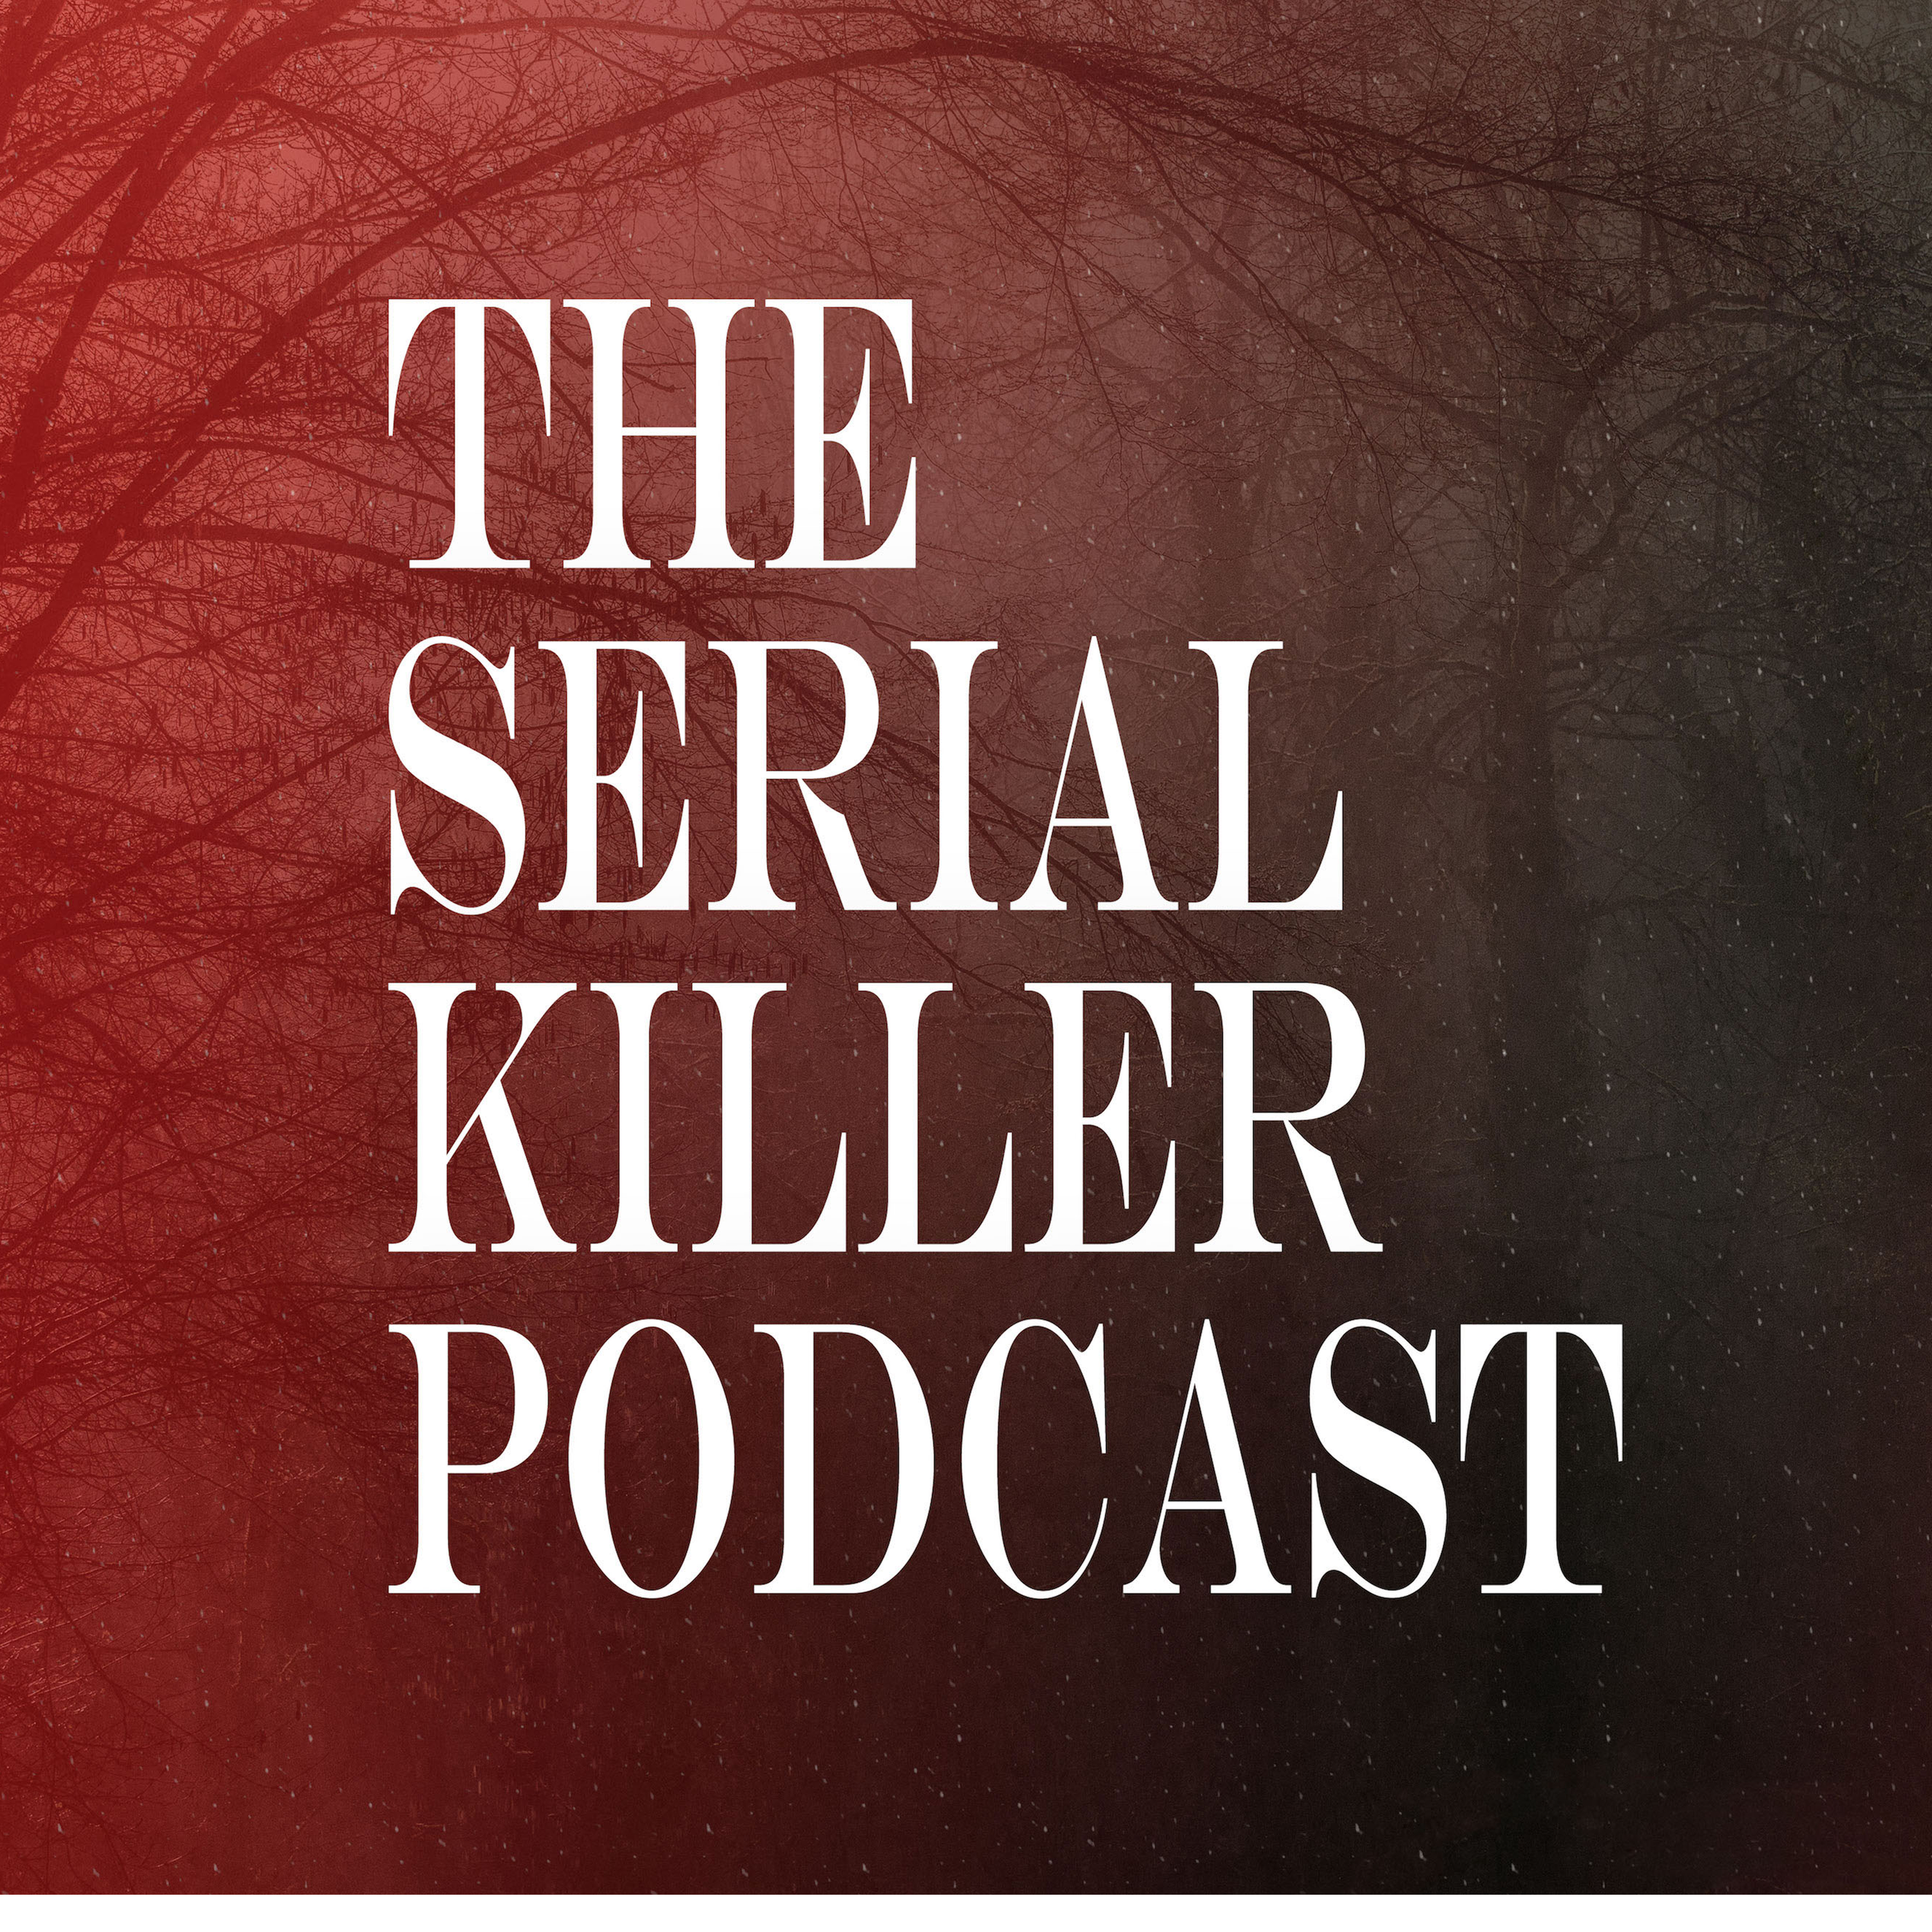 The Long Island Serial Killer - A summer special